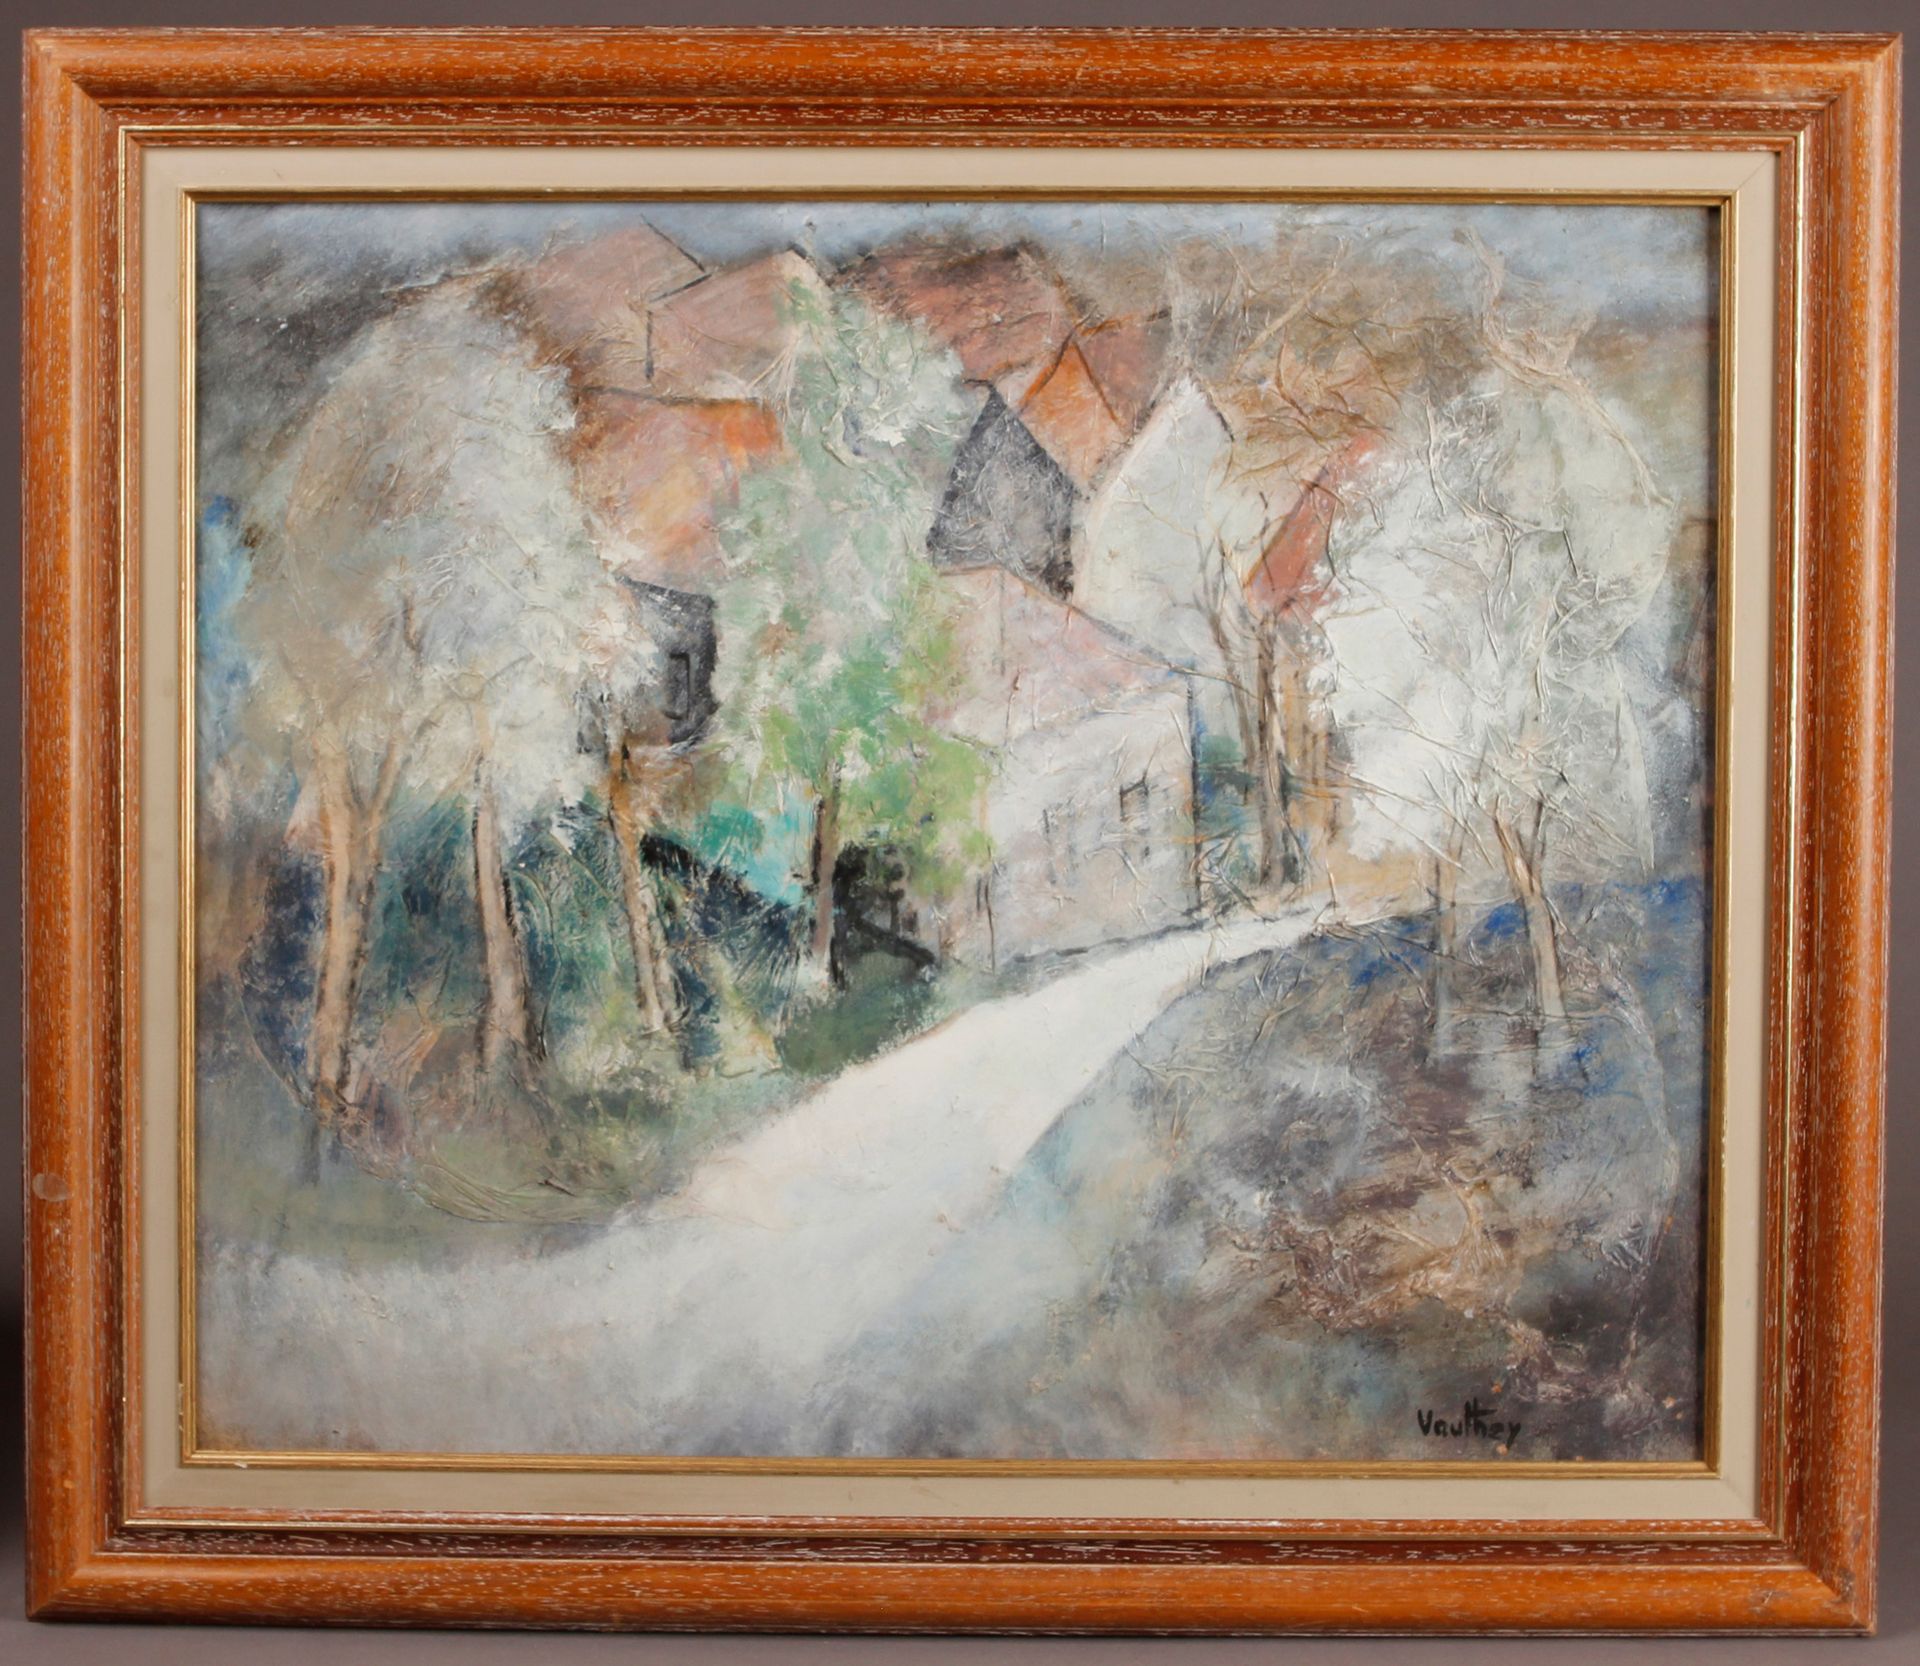 Null 皮埃尔-沃特海（1937-2019年）

村庄里的小路

油画，右下角有签名。

54 x 65 厘米

(天然木框)。